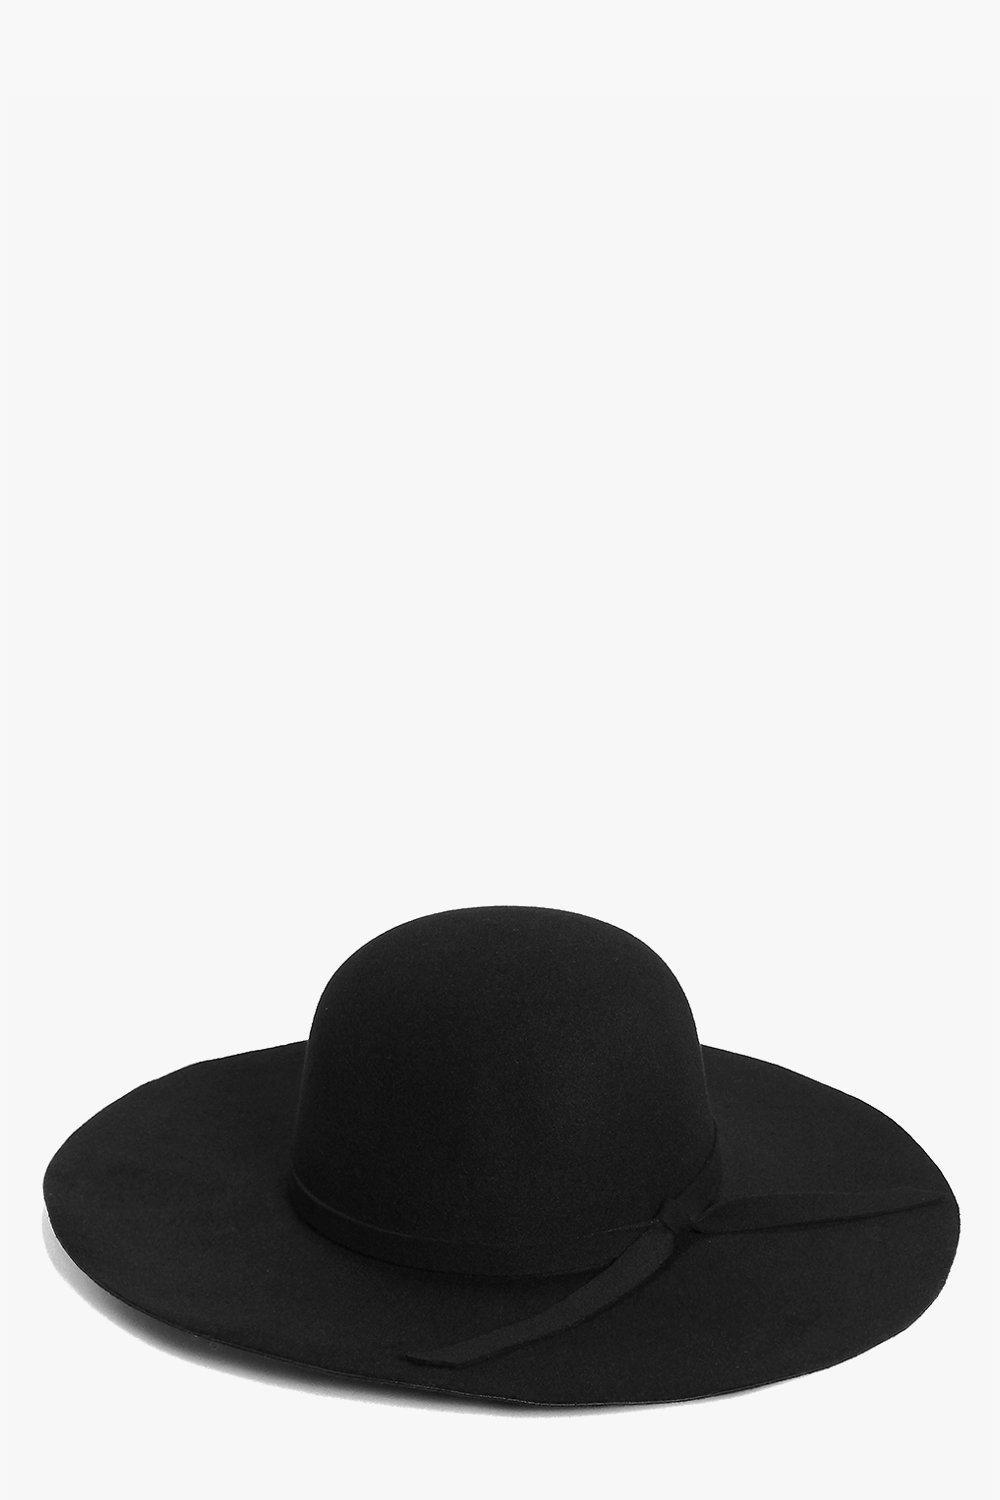 czarny okrągły kapelusz